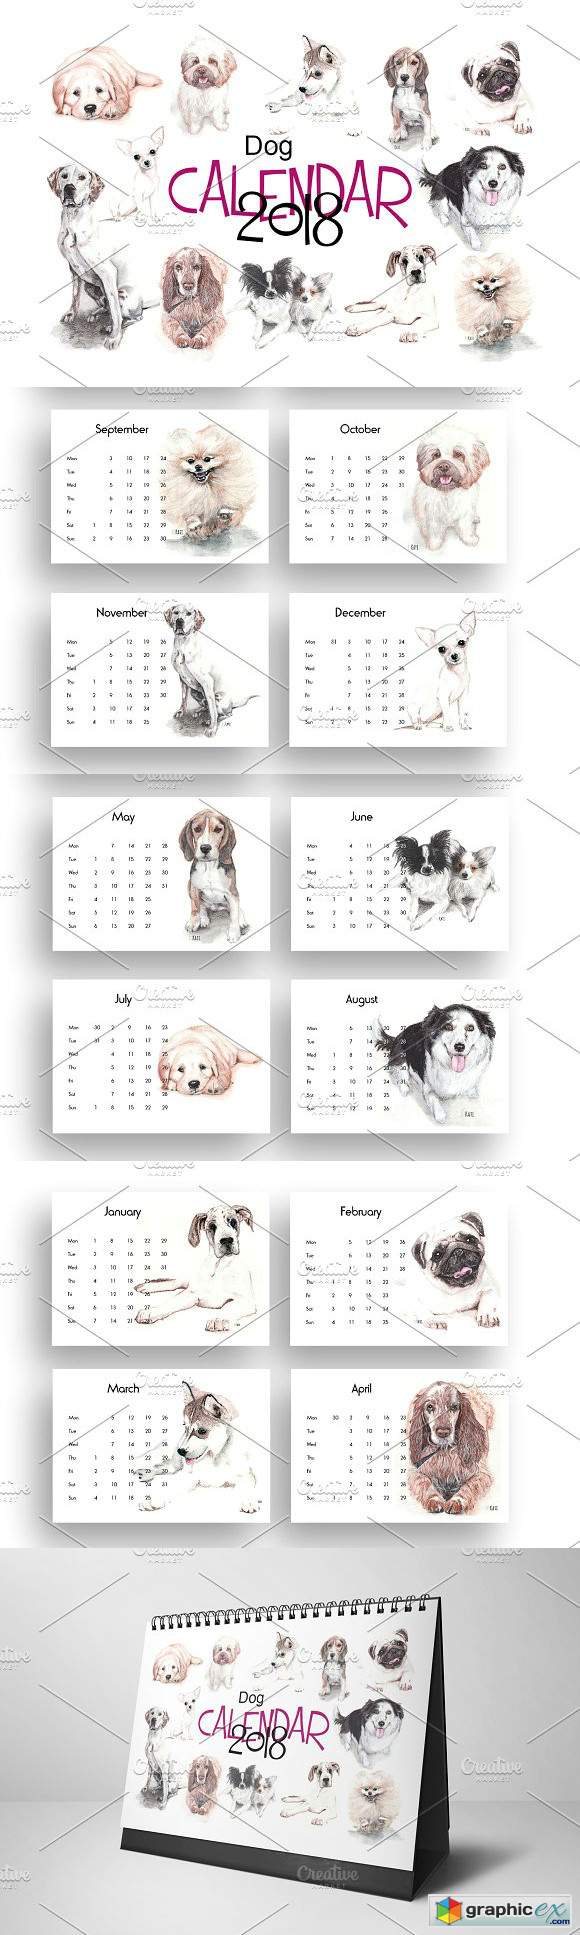 Dogs calendar 2018-19